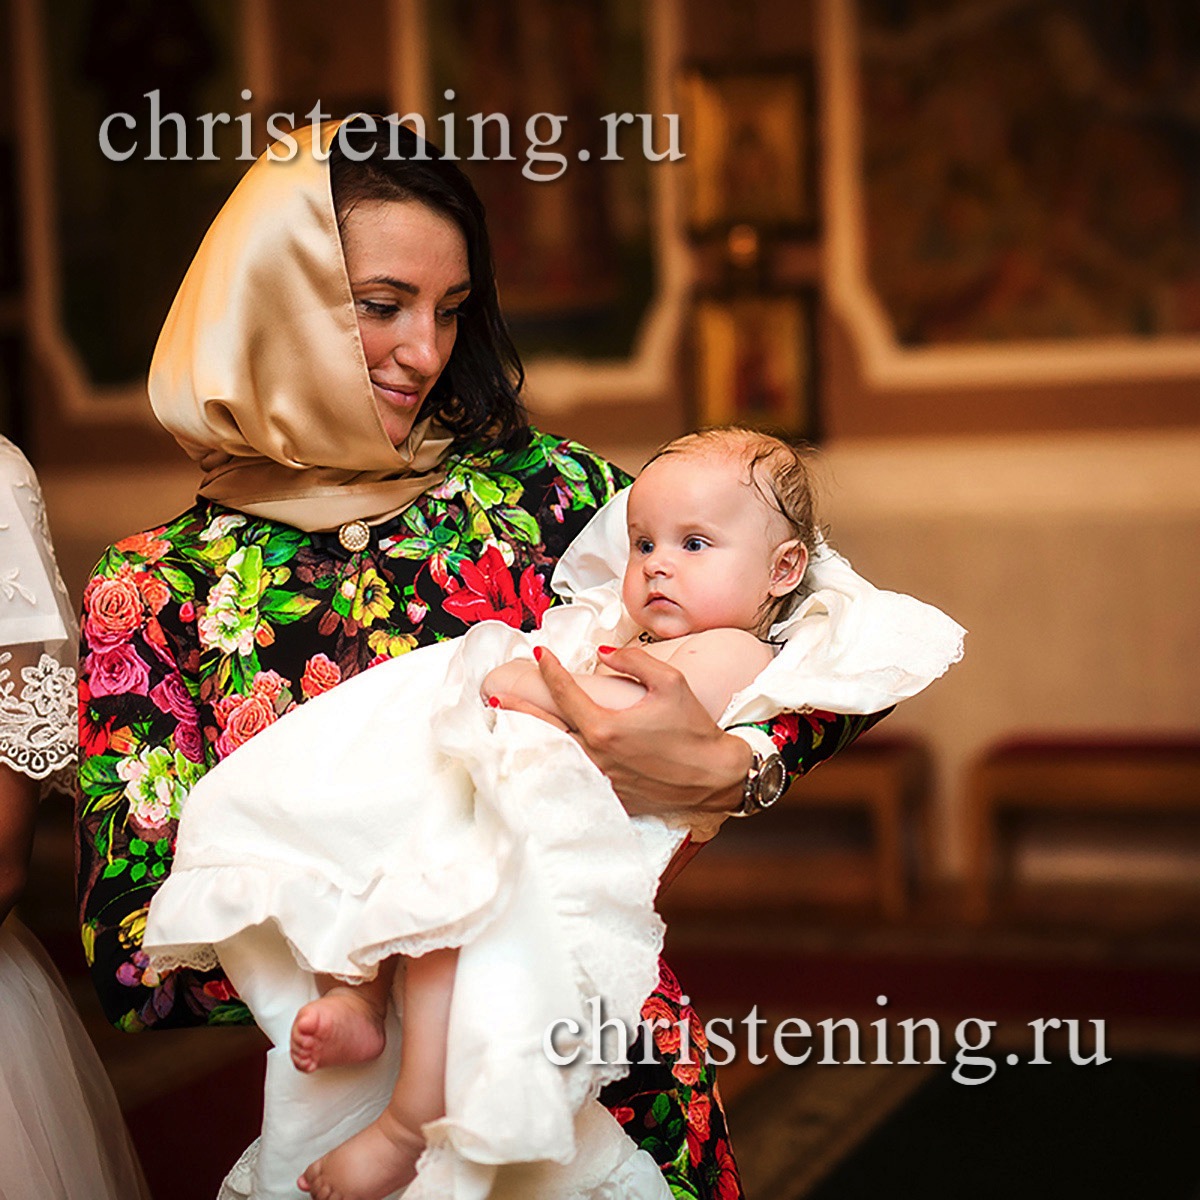 Крещение ребенка в православии